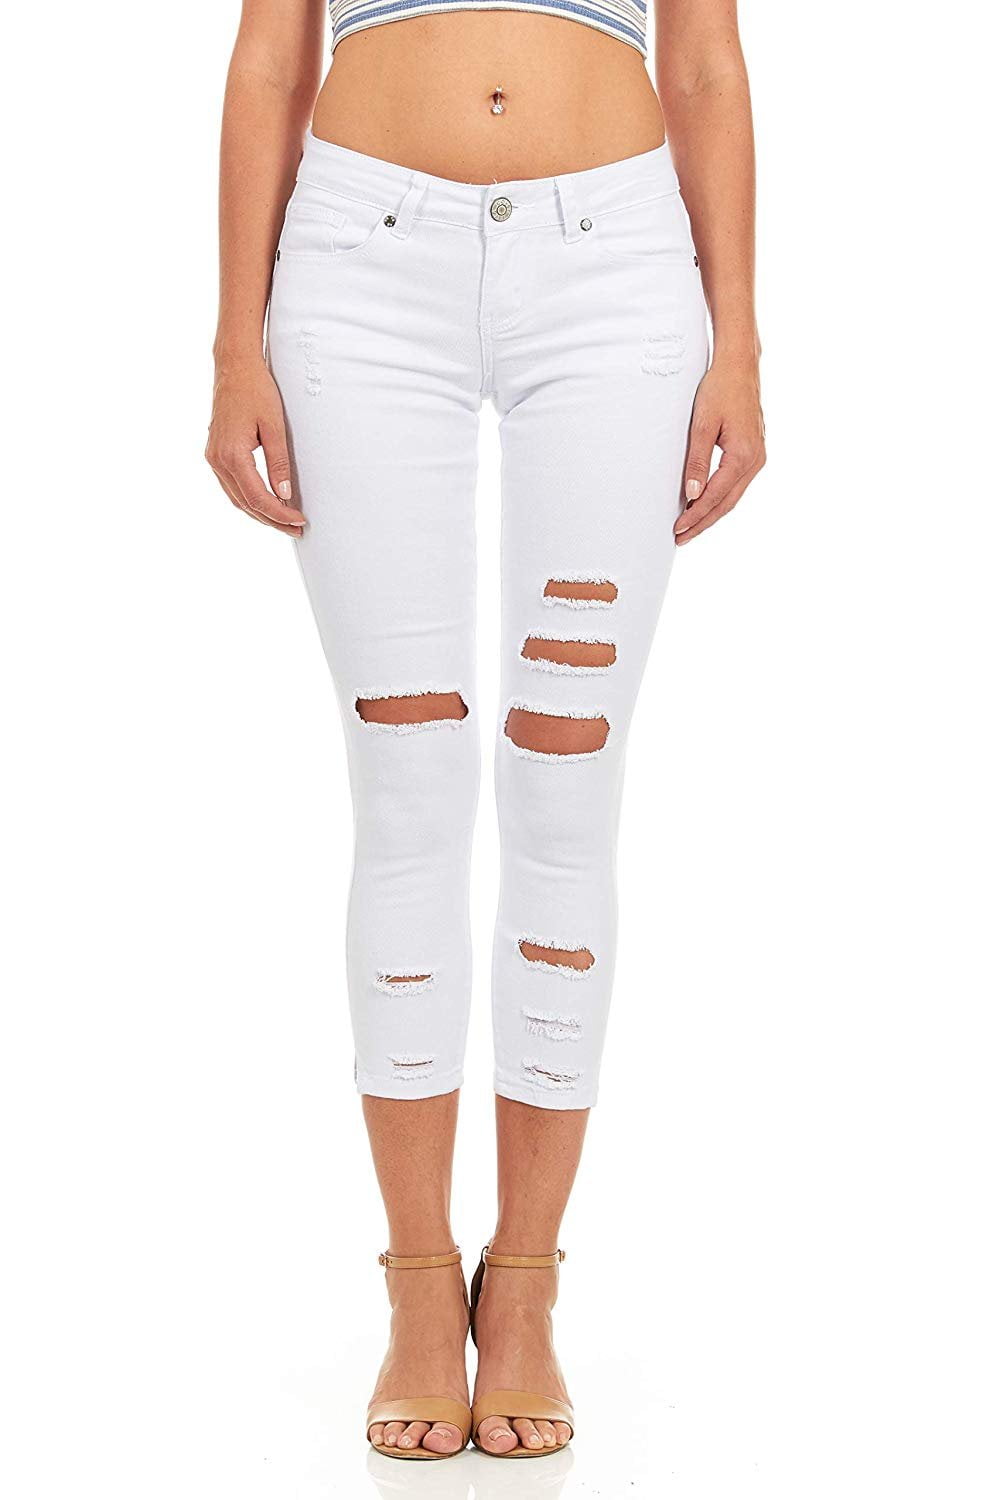 juniors white jeans